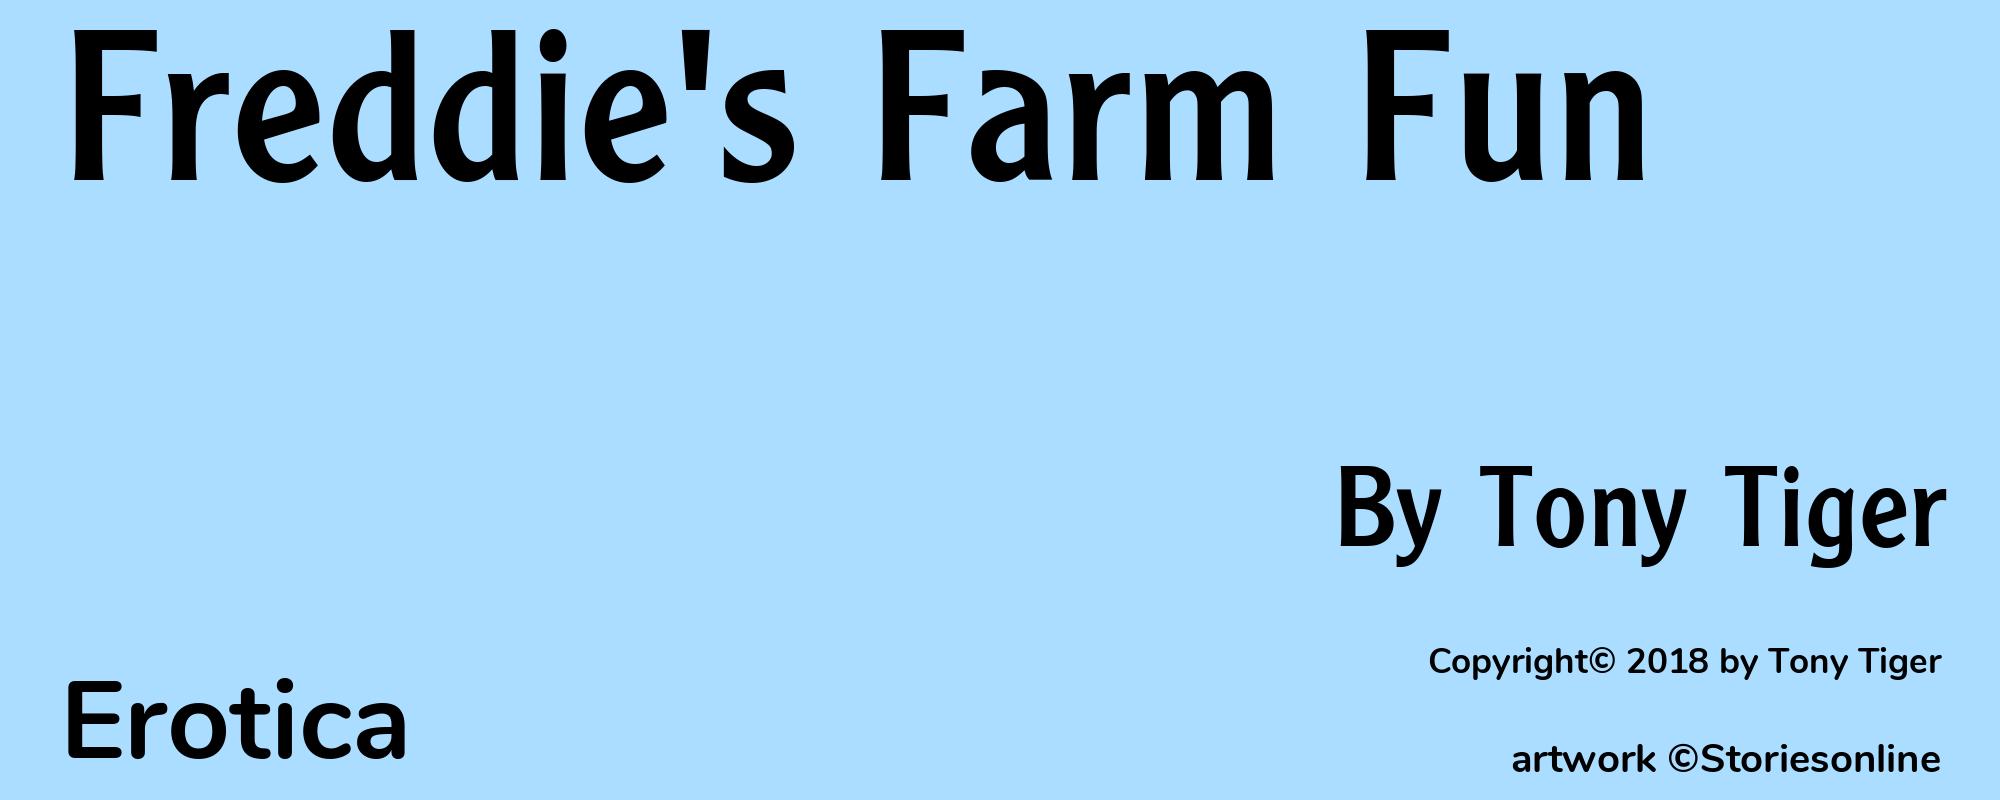 Freddie's Farm Fun - Cover